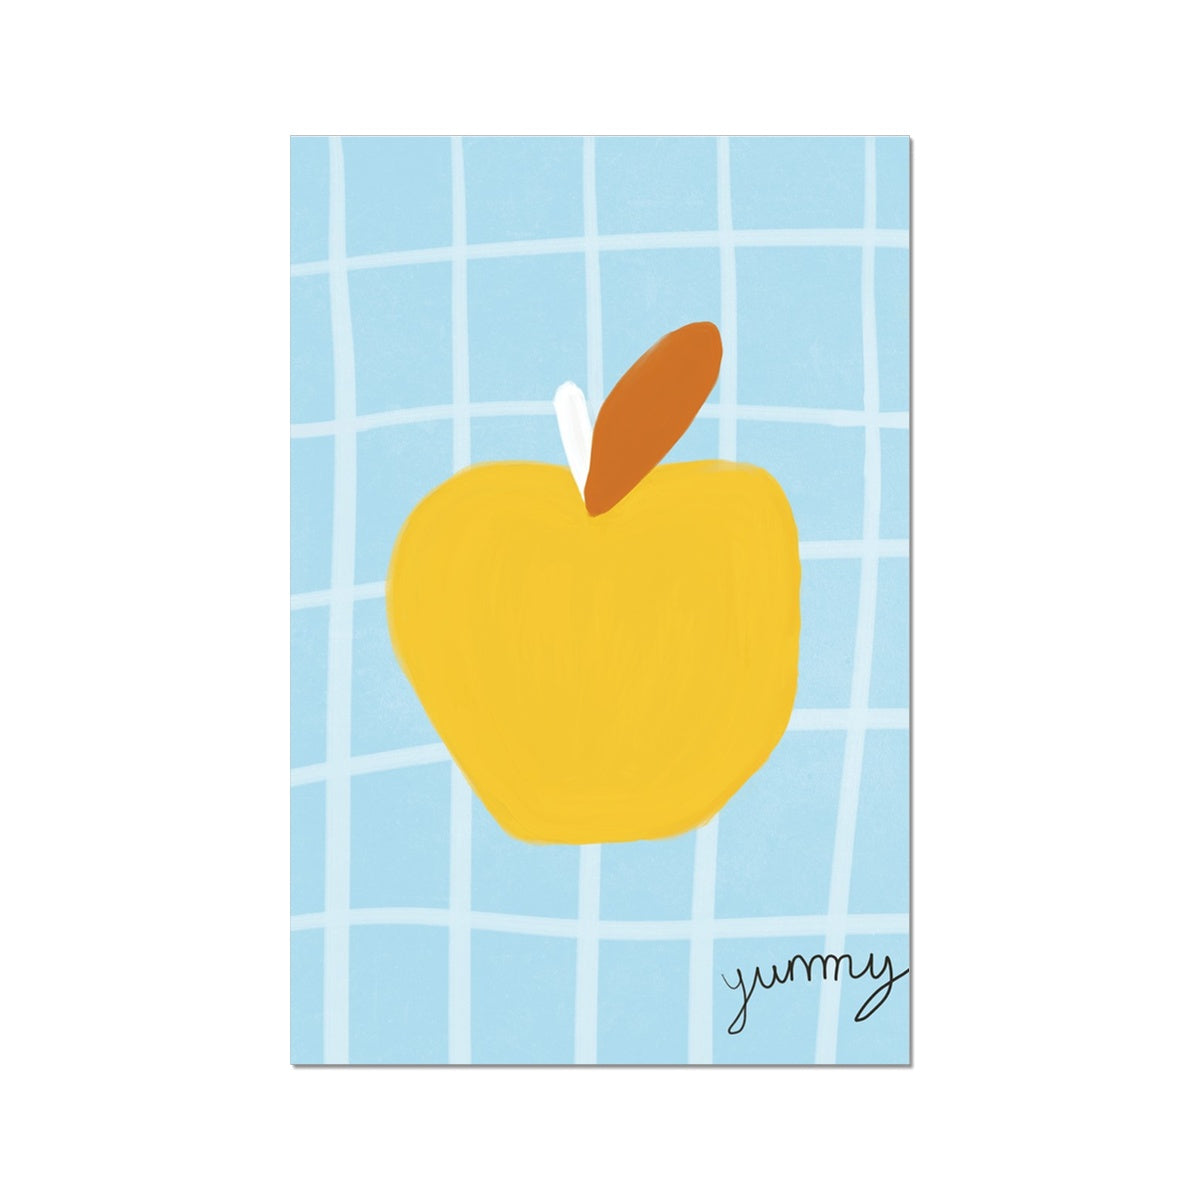 Yummy Apple Print - Blue, Yellow Fine Art Print